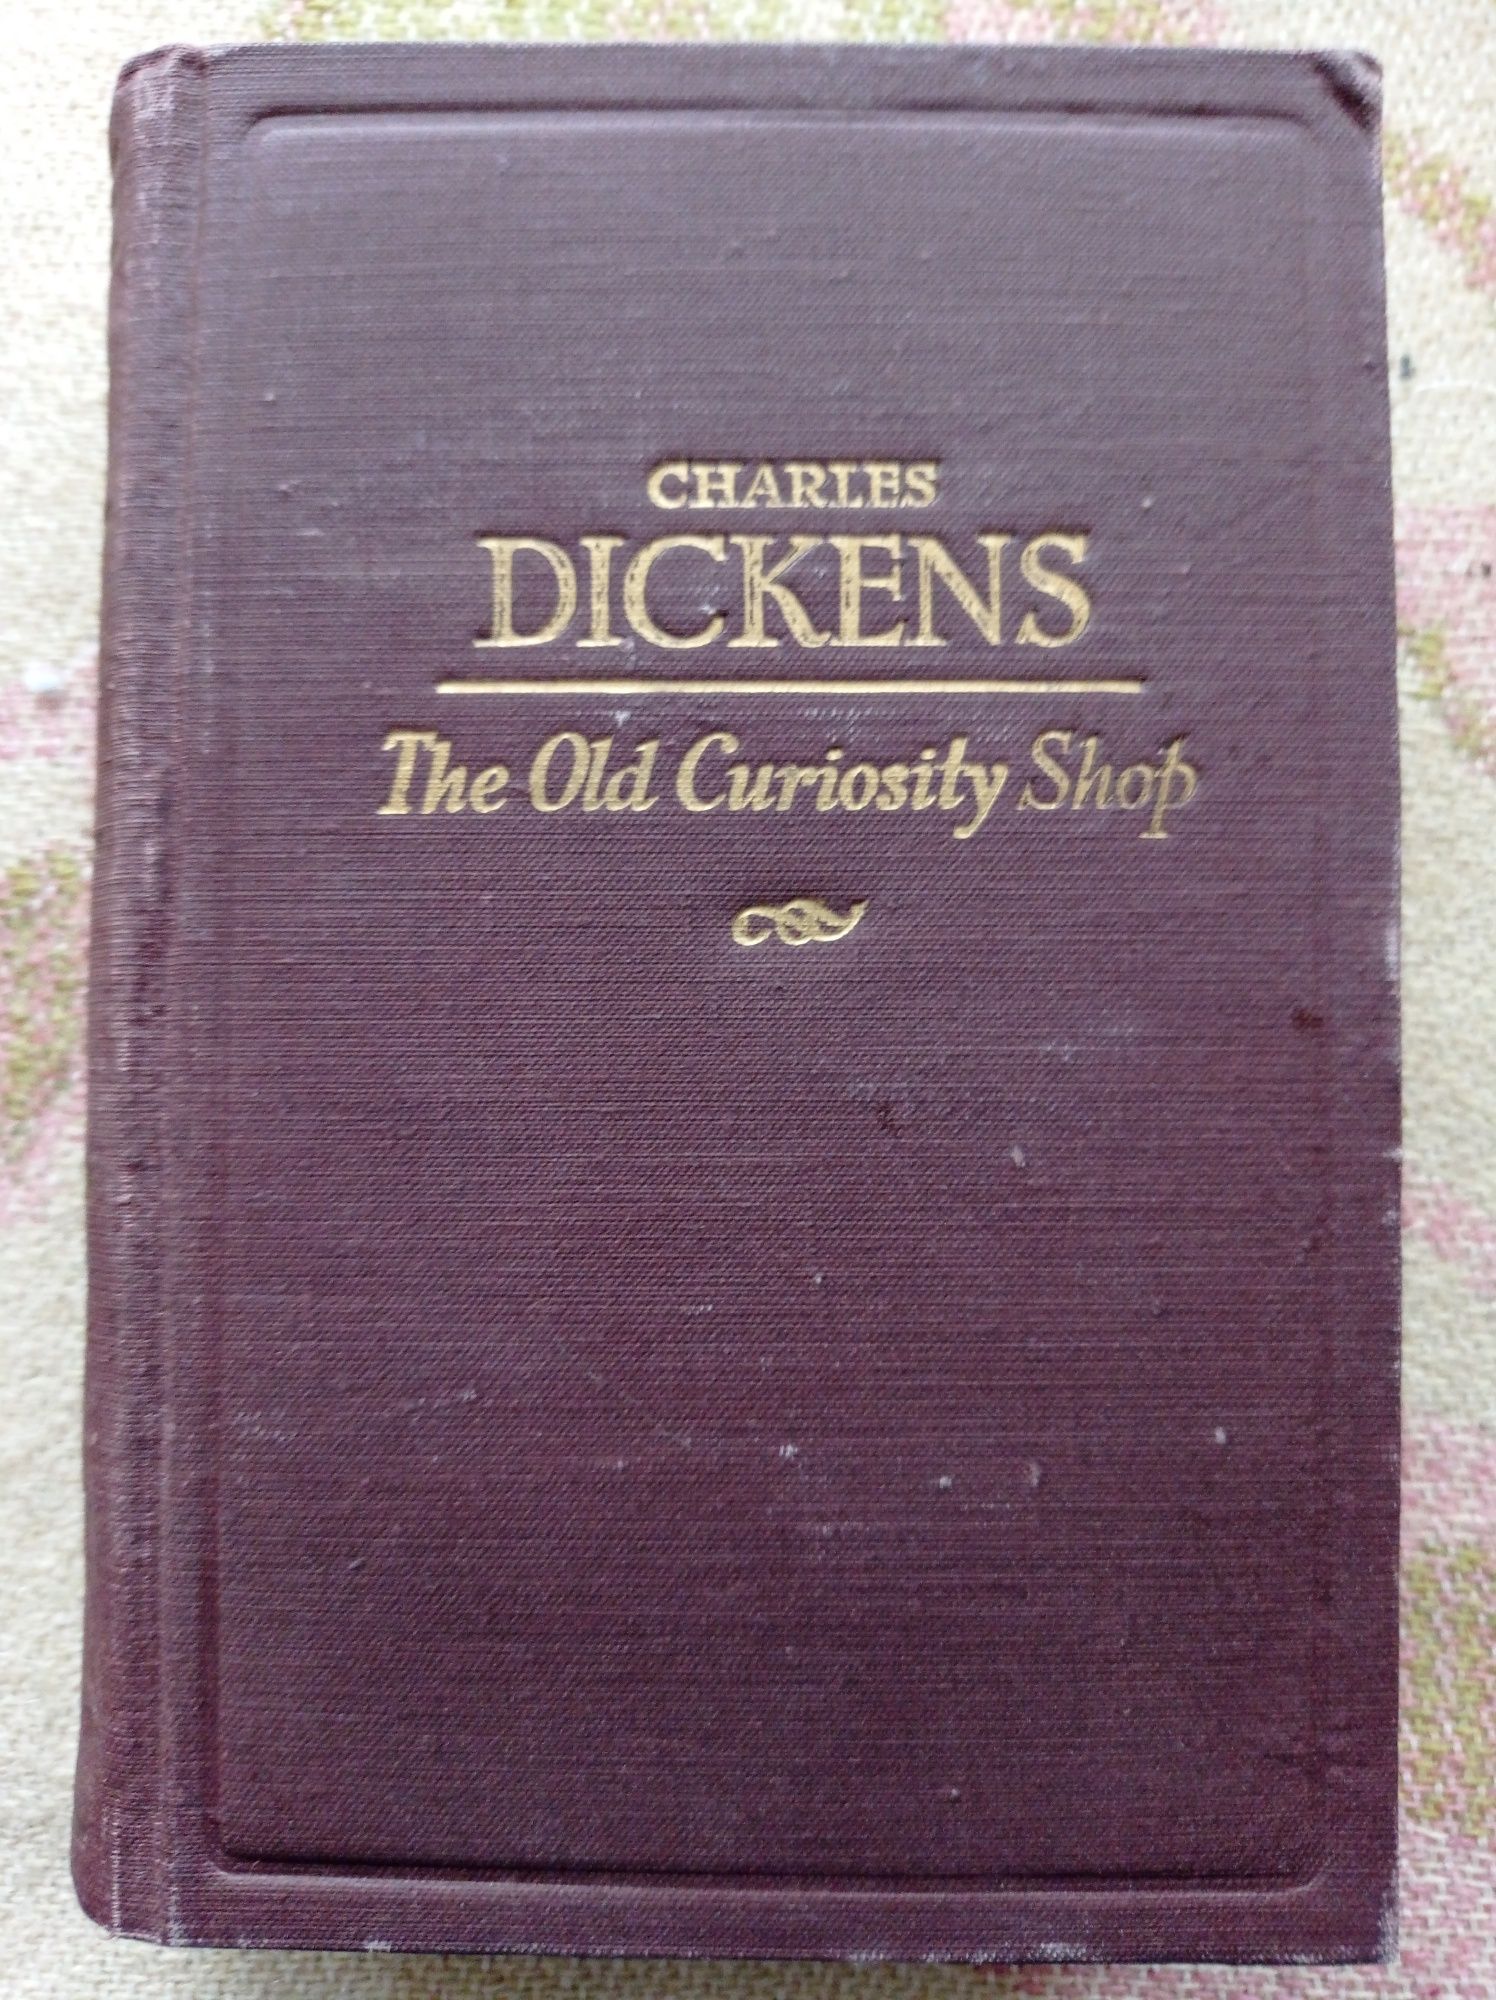 Charles Dickens The old curiosity shop Чарльз Диккенс Лавка древностей